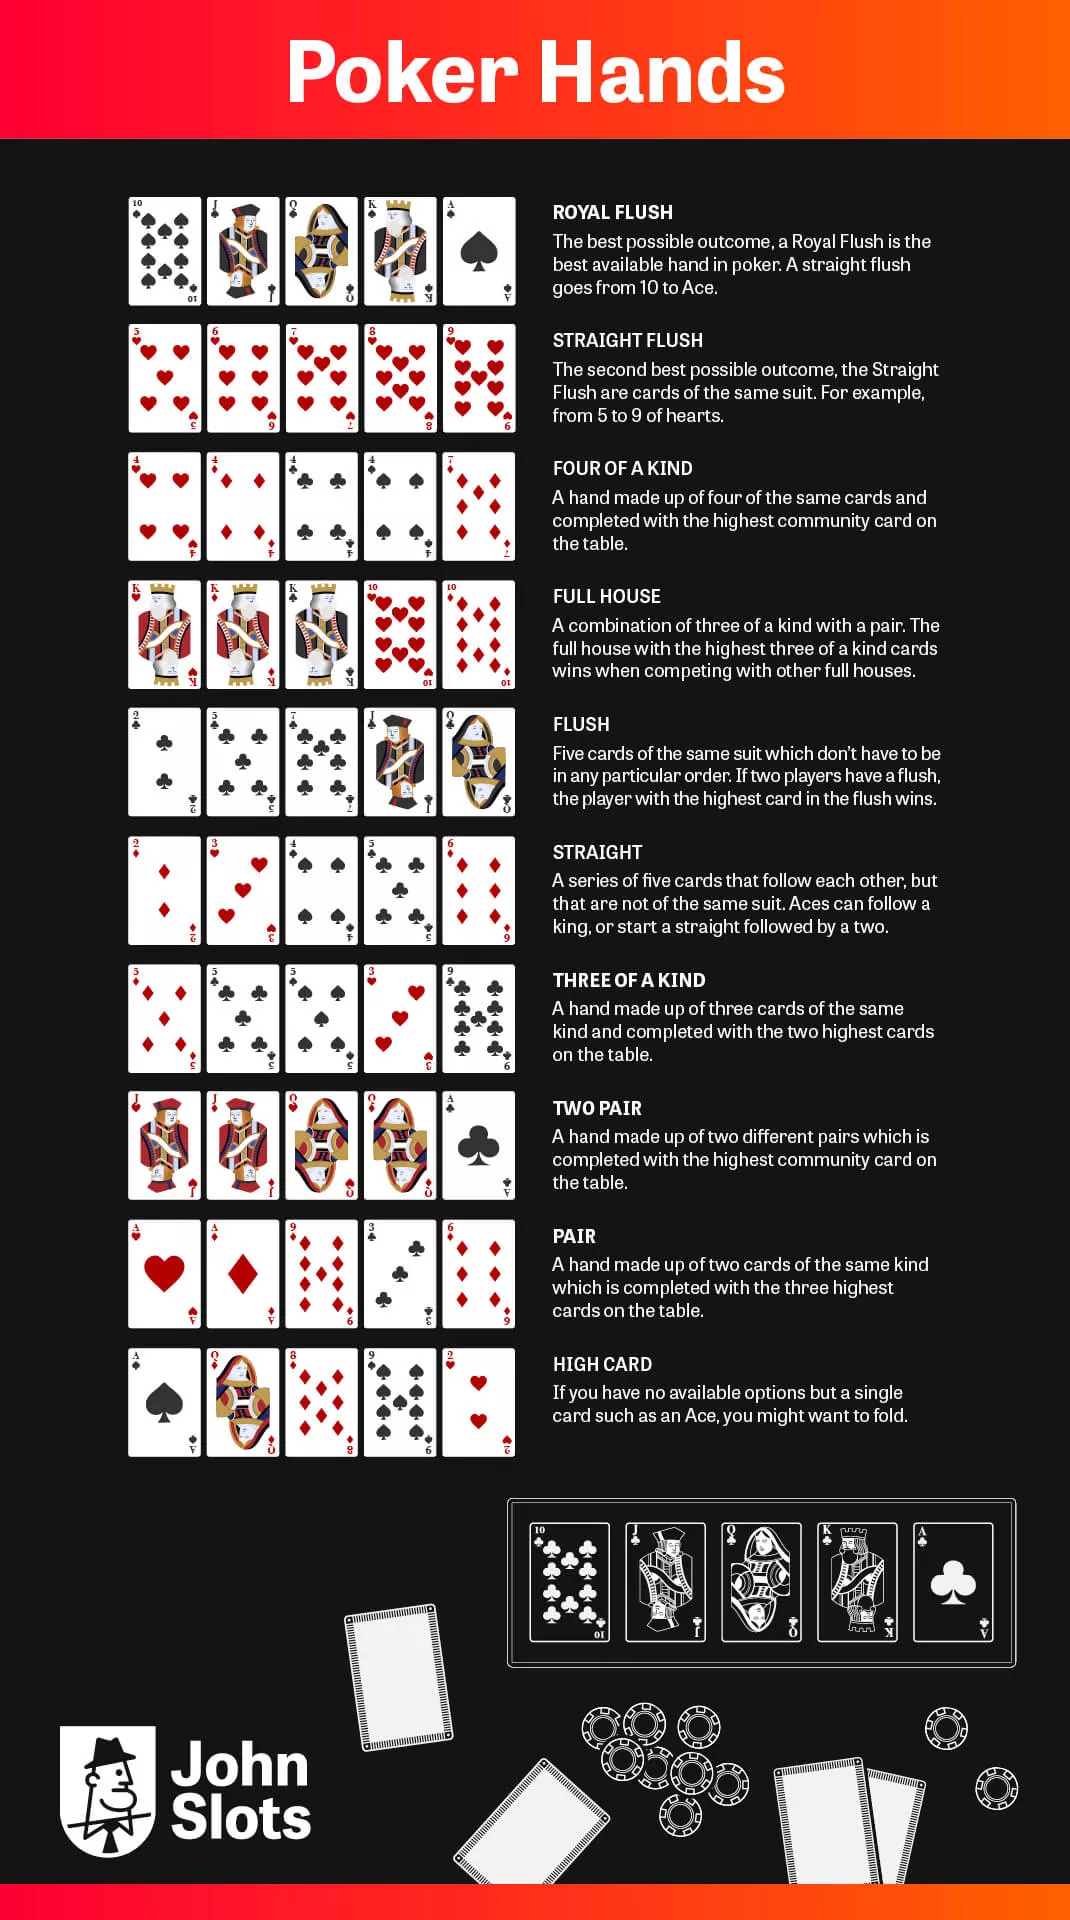 Poker rules - learn the basics of poker fast - JohnSlots.com